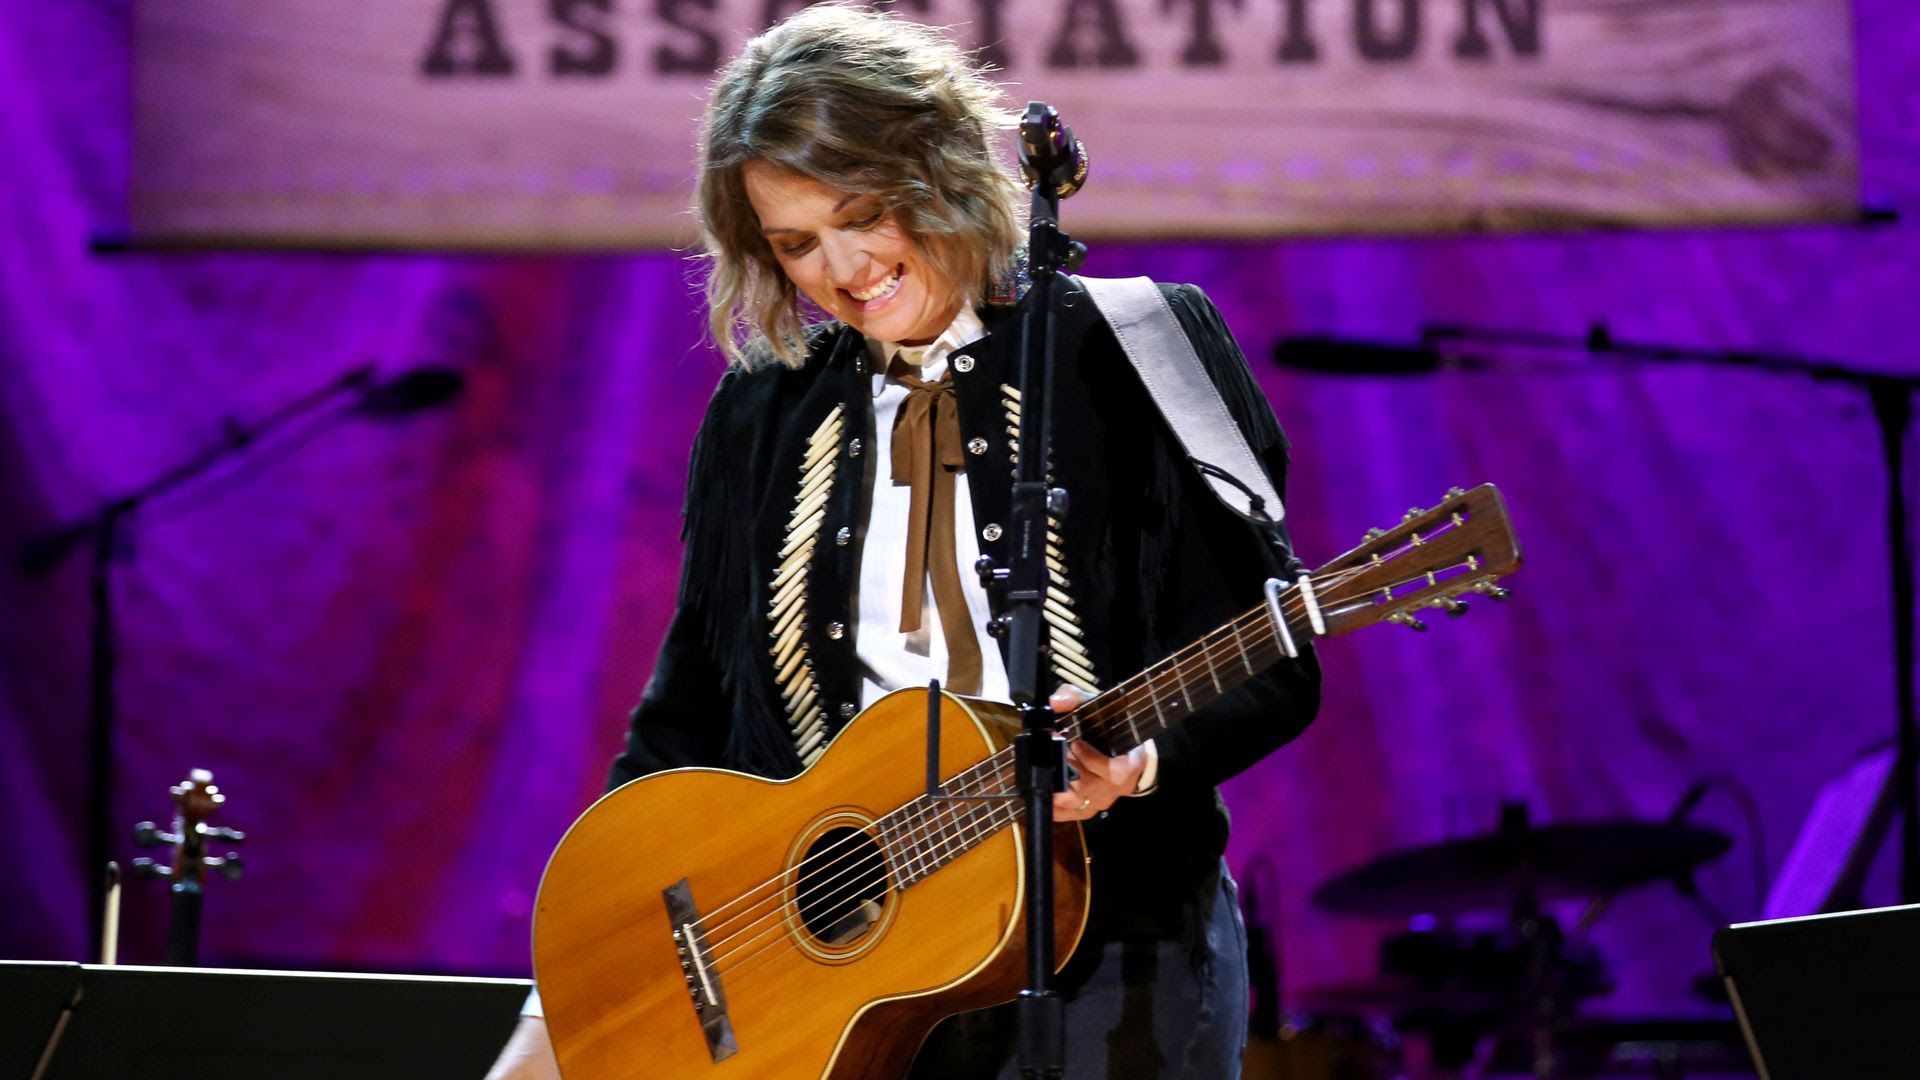 Brandi Carlisle holding a guitar and performing at the 2019 Americana Awards.